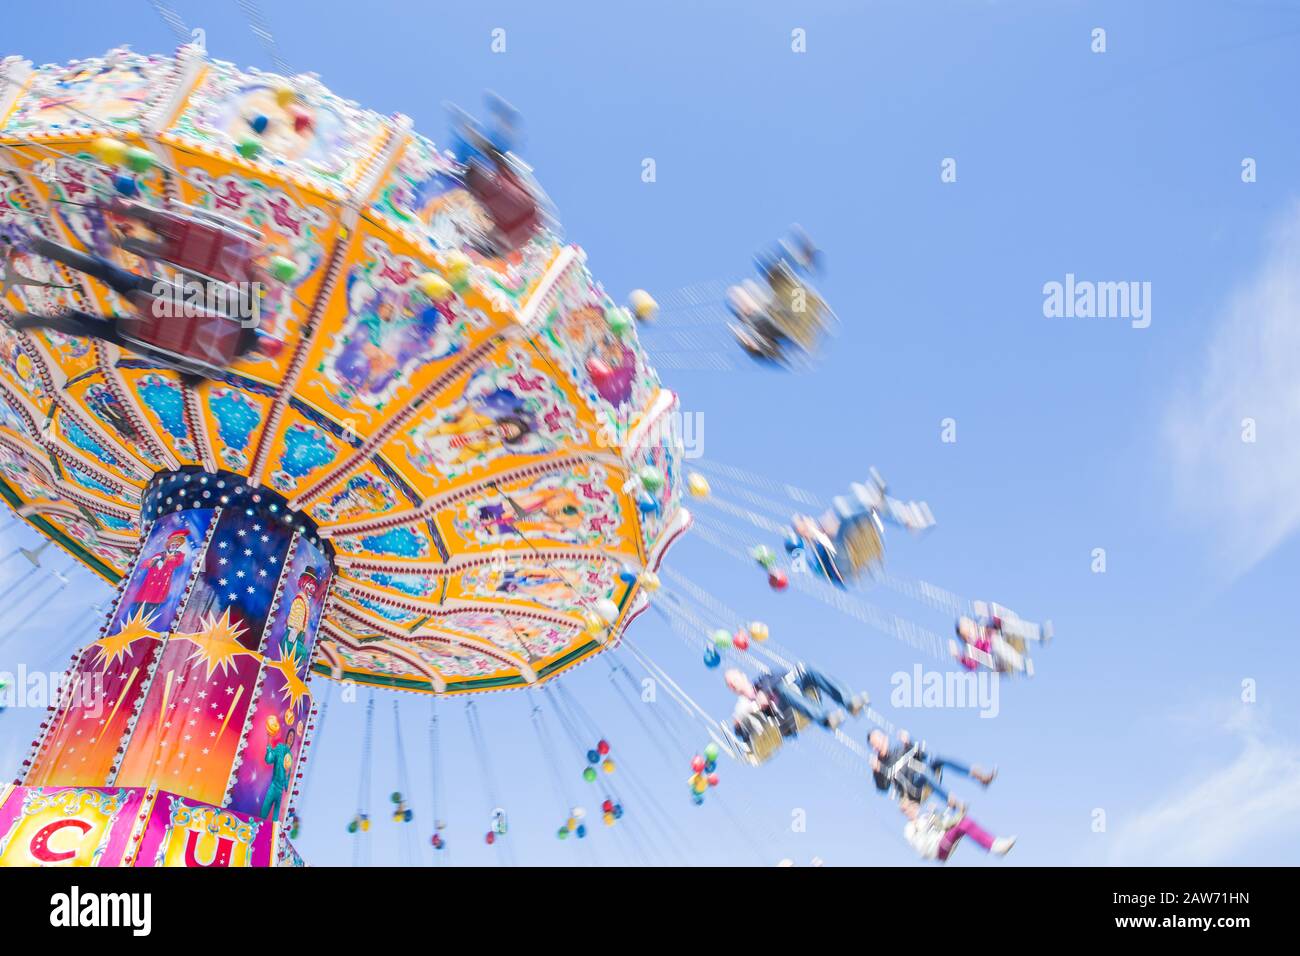 Chain carousel ride in an amusement parks carnivals or funfair, Munich, German Stock Photo